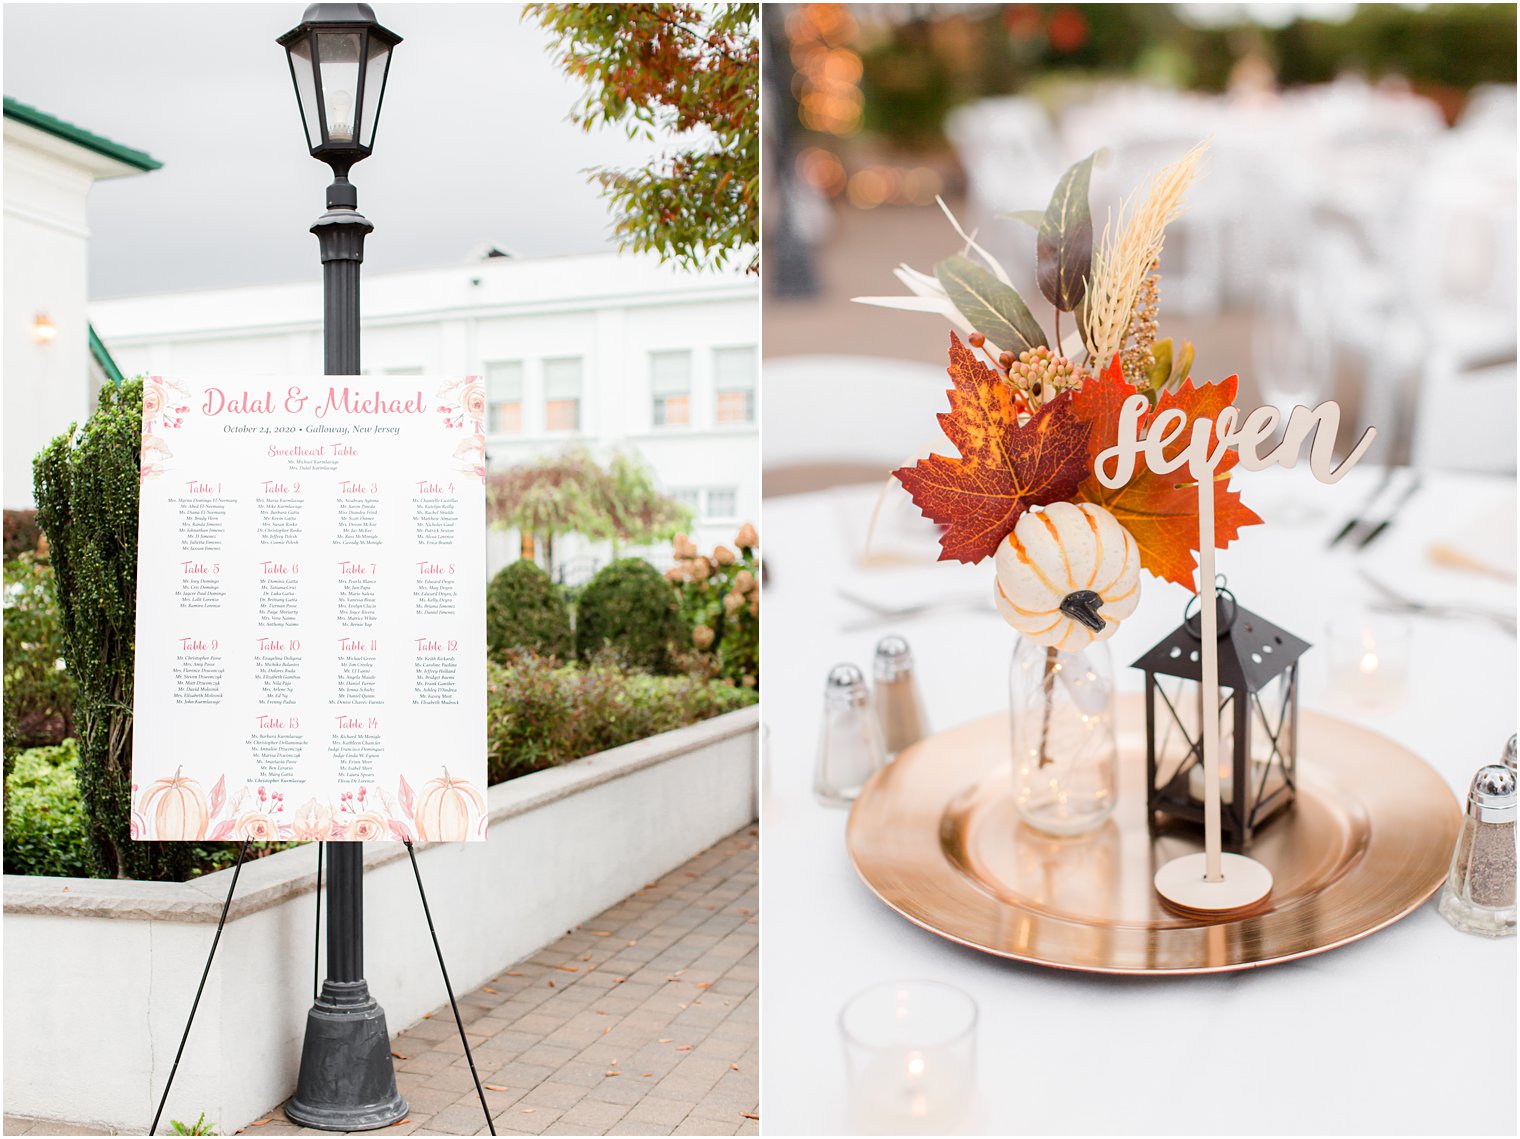 elegant fall wedding reception centerpieces with lanterns and pumpkins